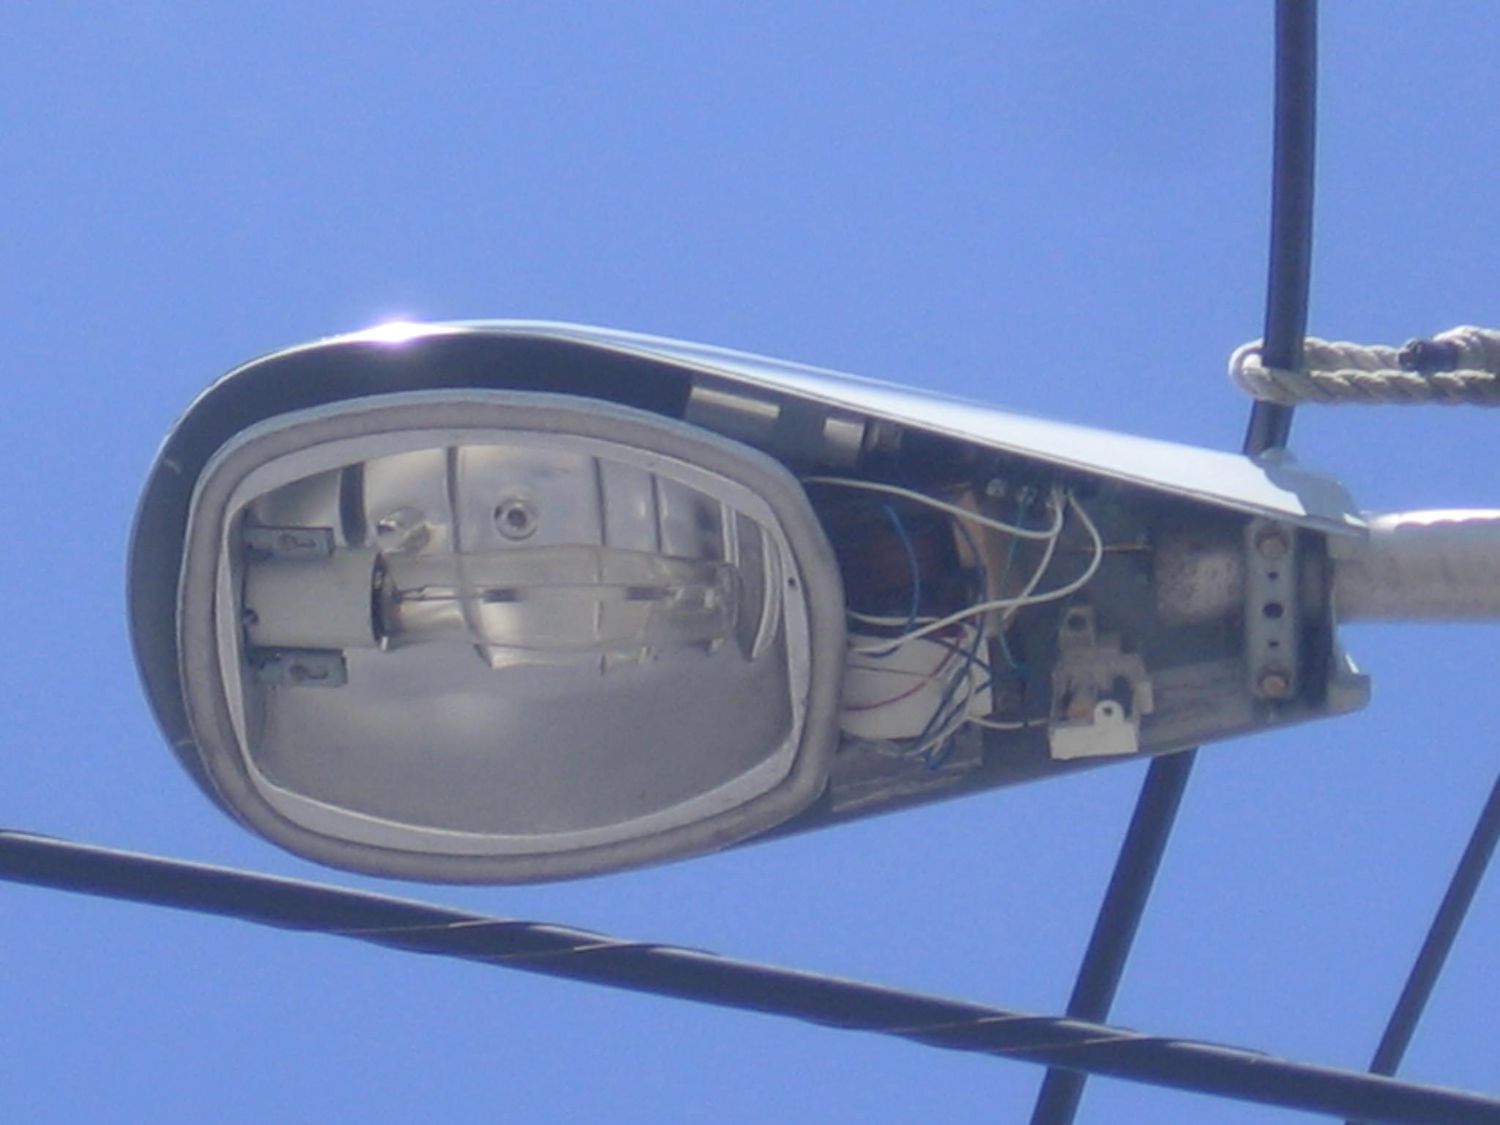 2007 General Electric M250R2
From Everett, MA
Keywords: American_Streetlights